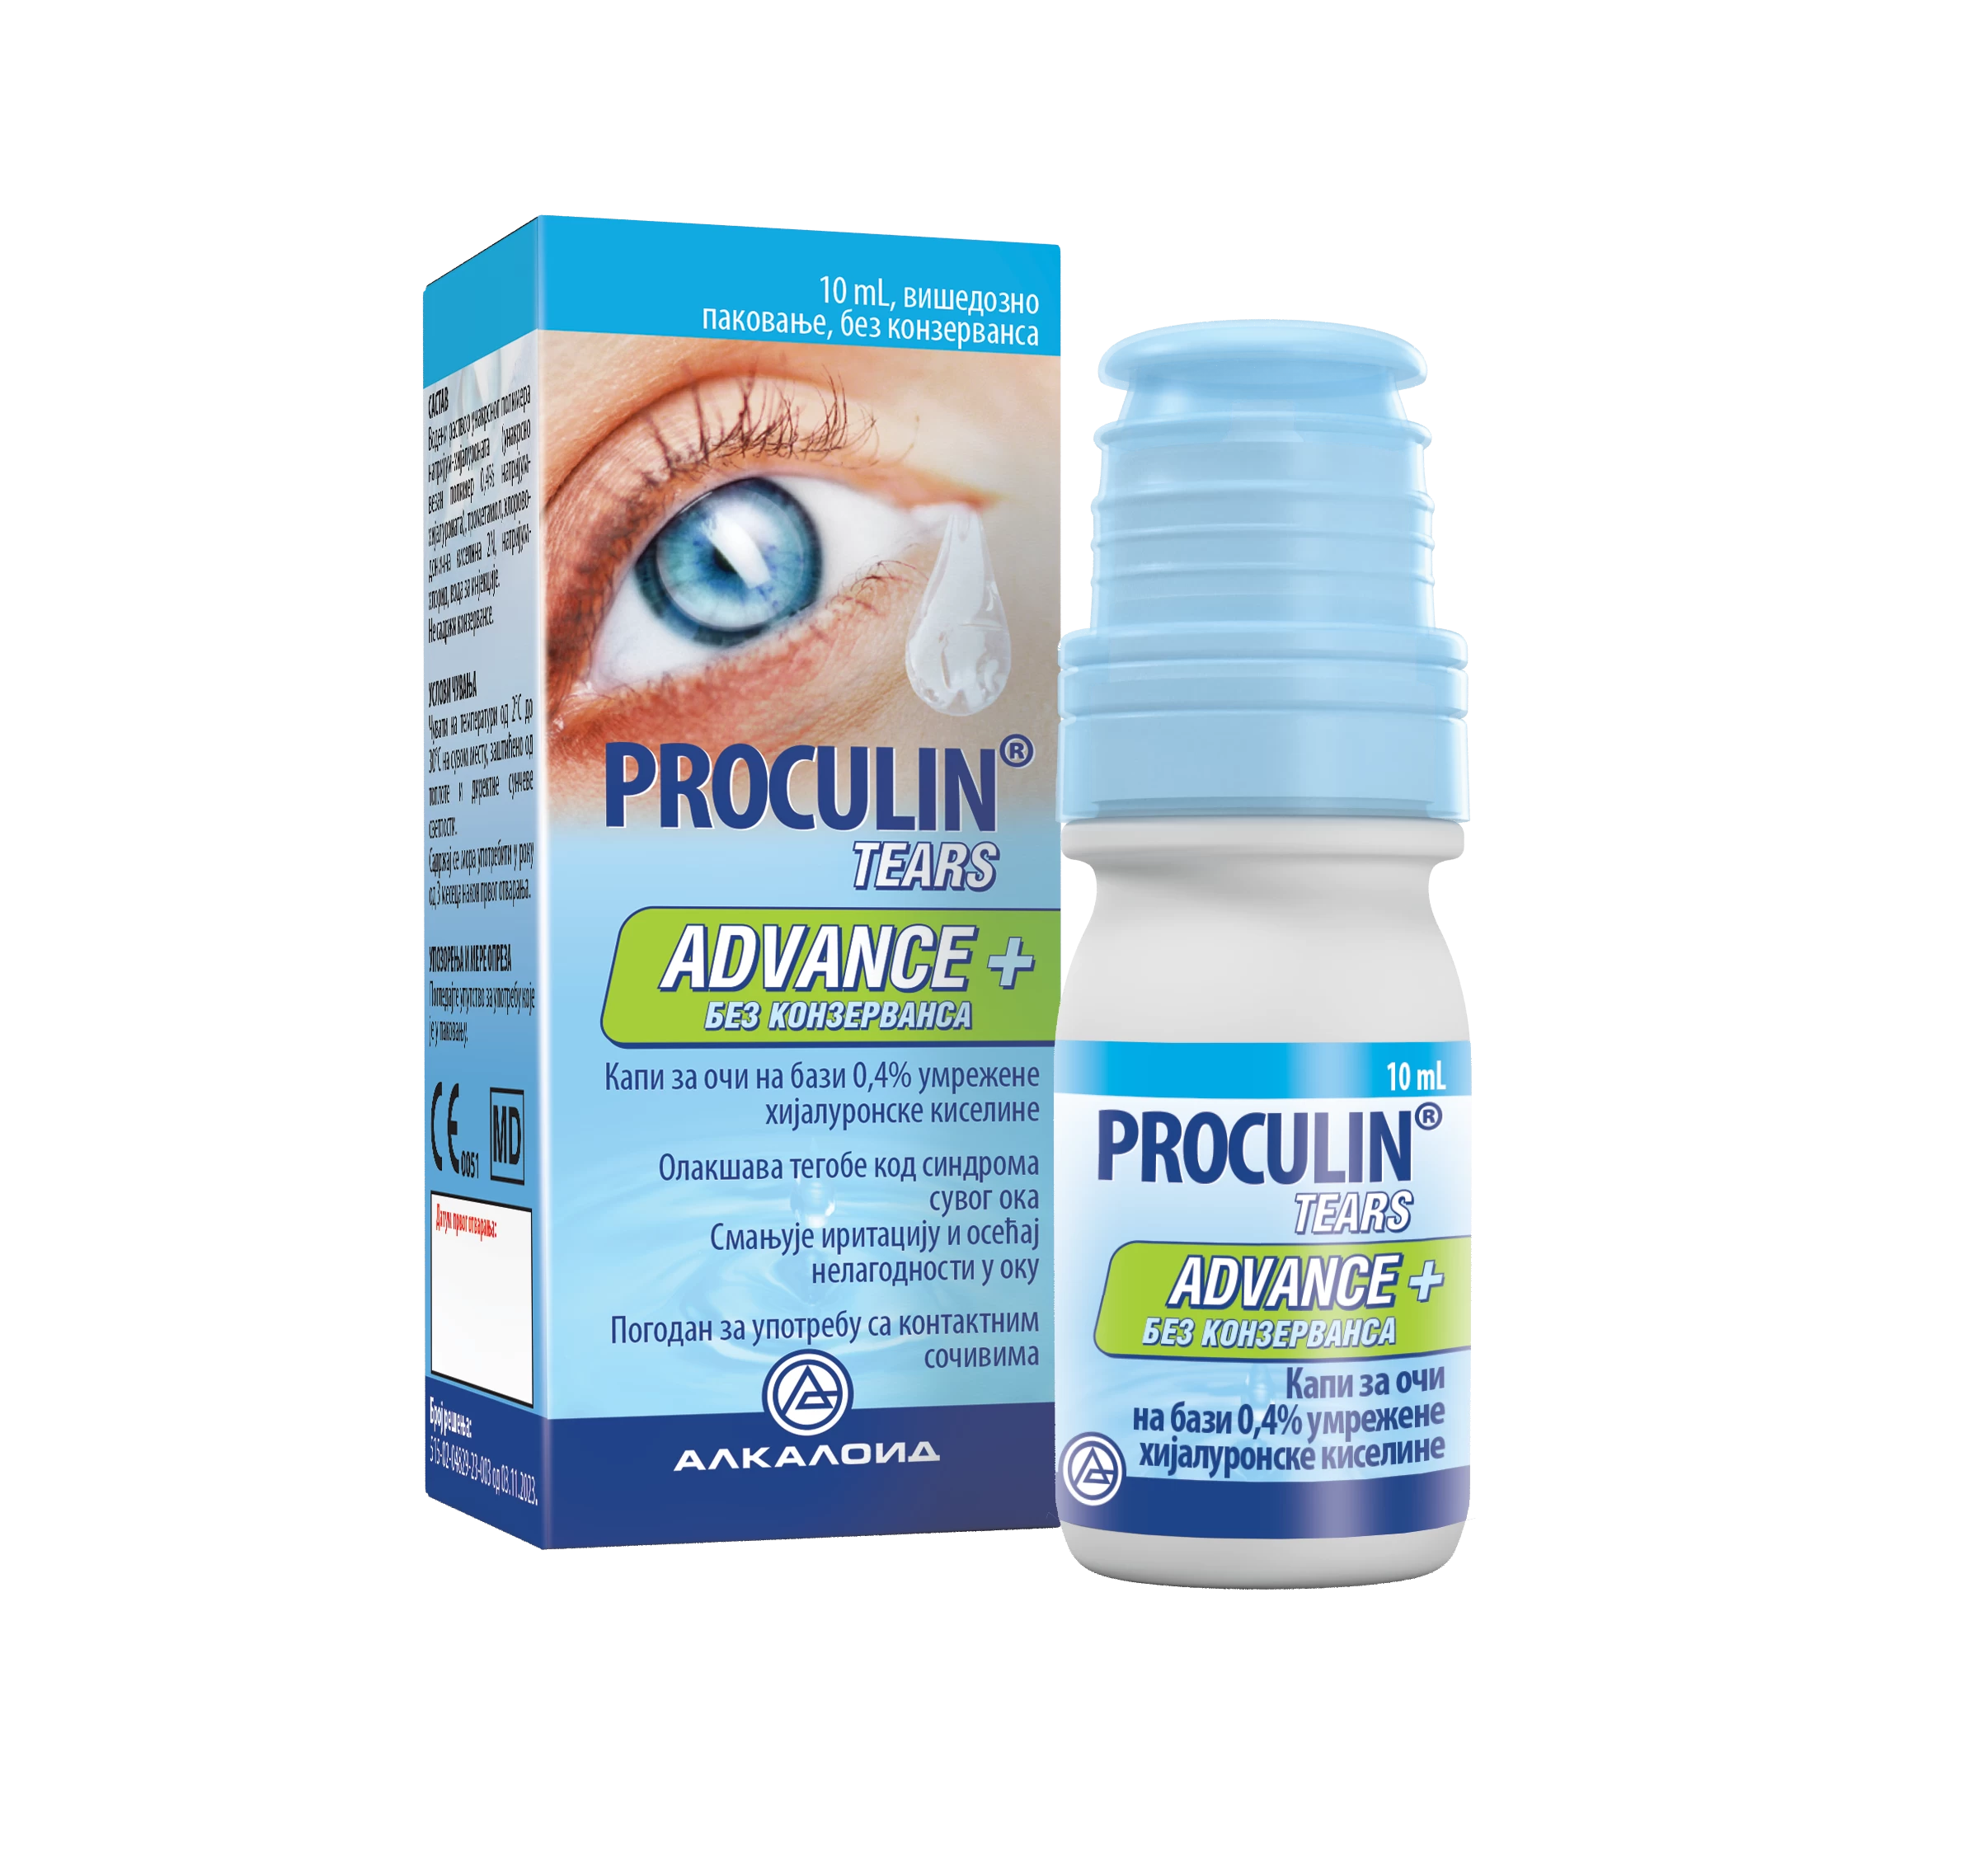 PROCULIN TEARS ADVANCE + 10ml